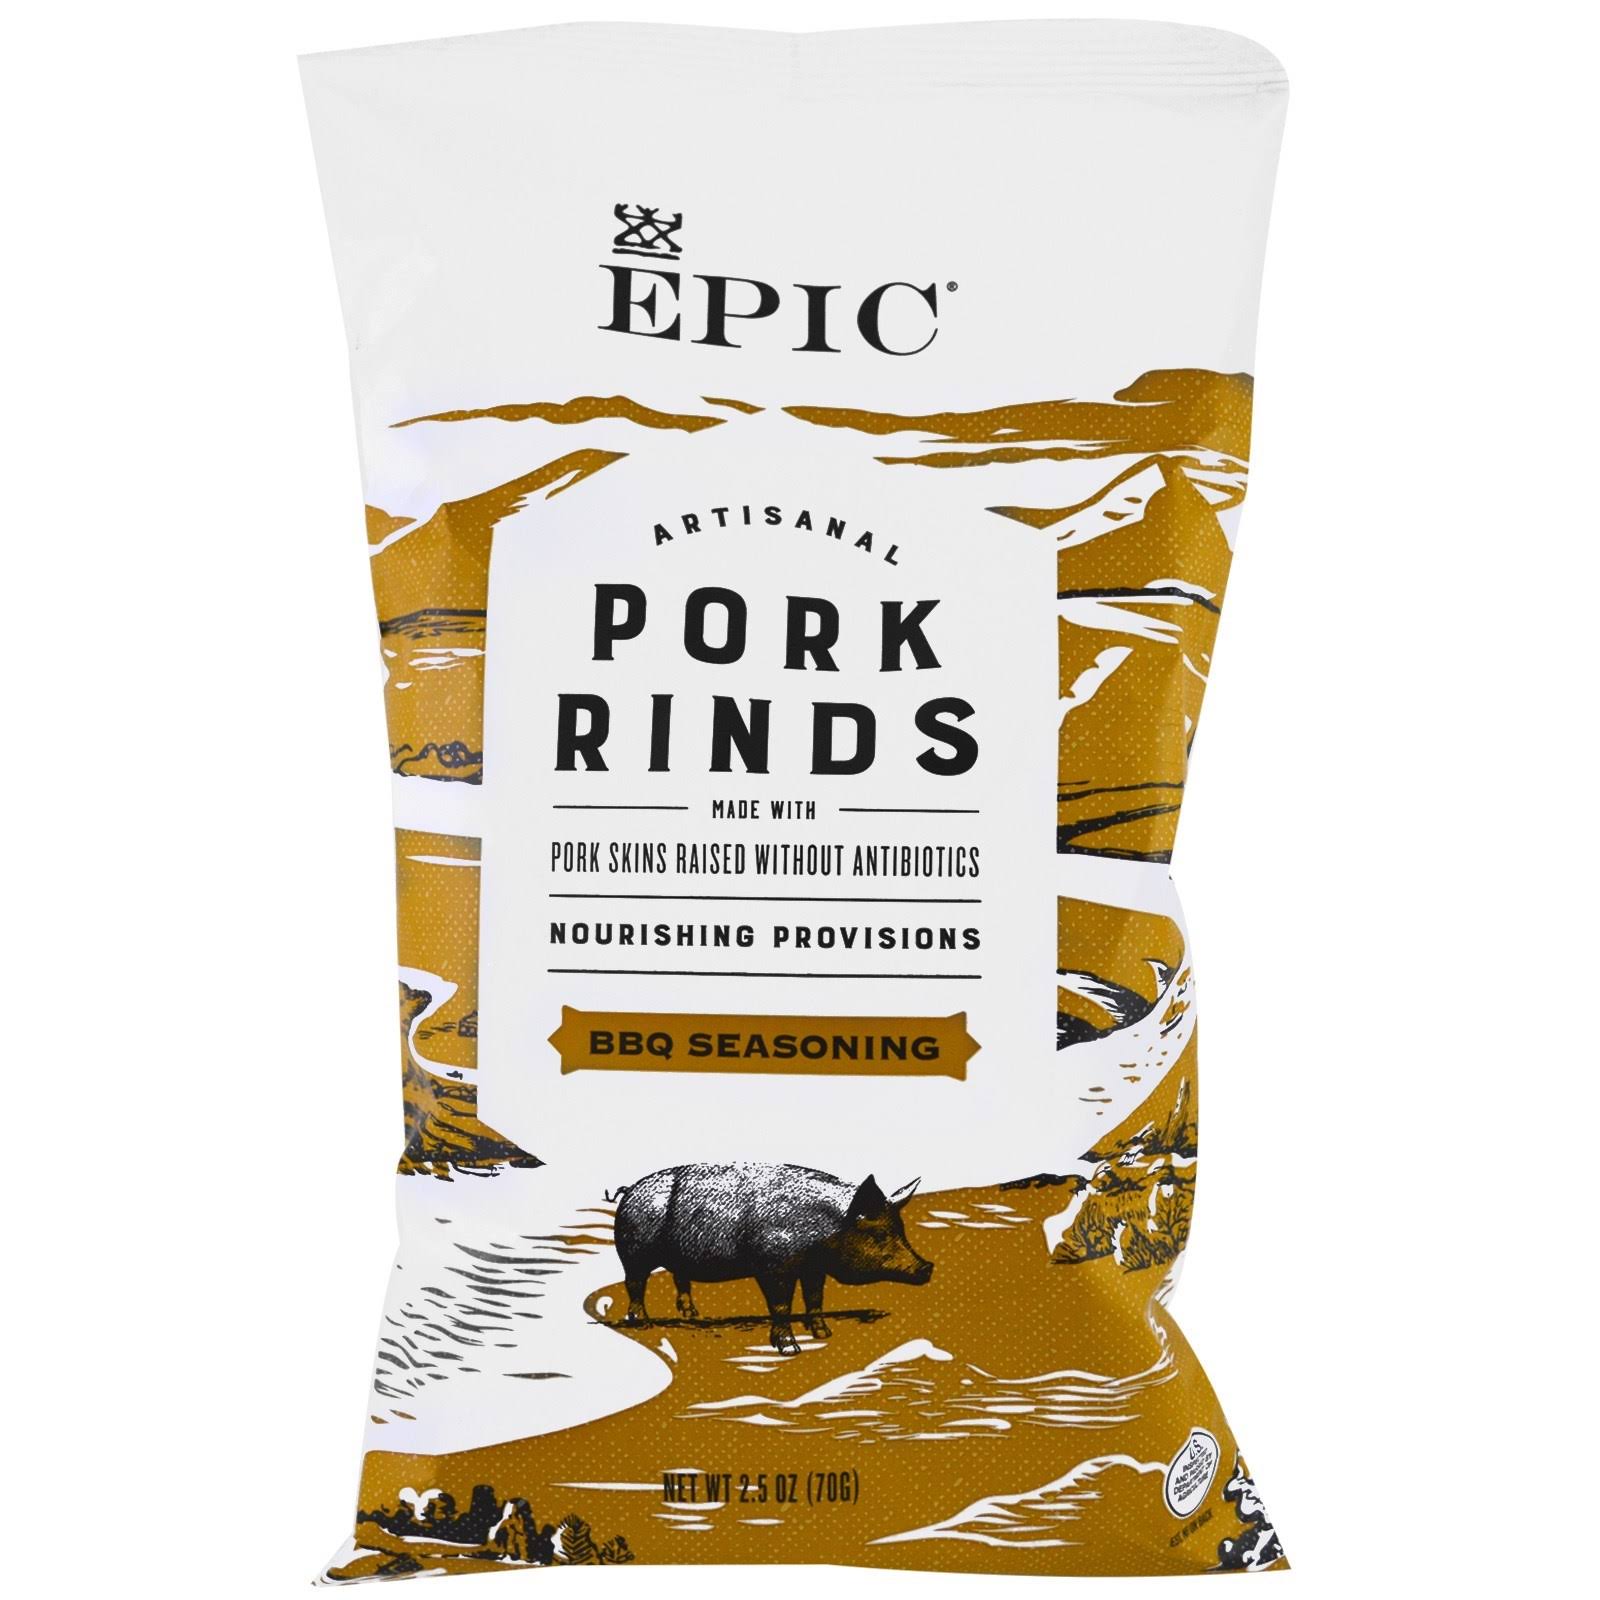 Epic Artisanal Pork Rinds BBQ Seasoning 2.5 oz.